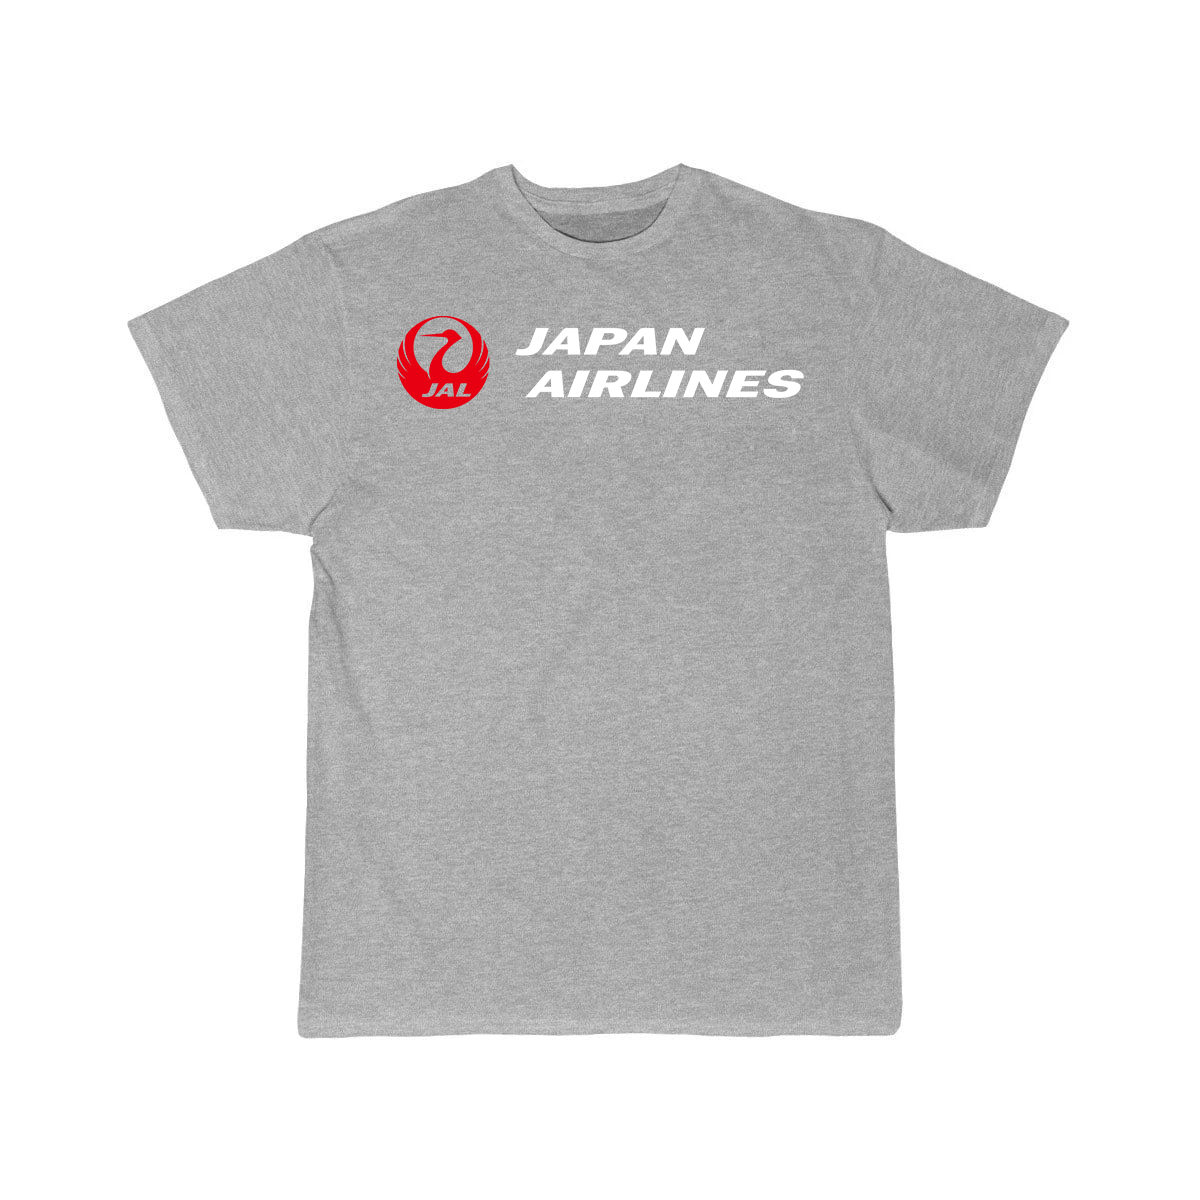 JAPAN AIRLINE T-SHIRT